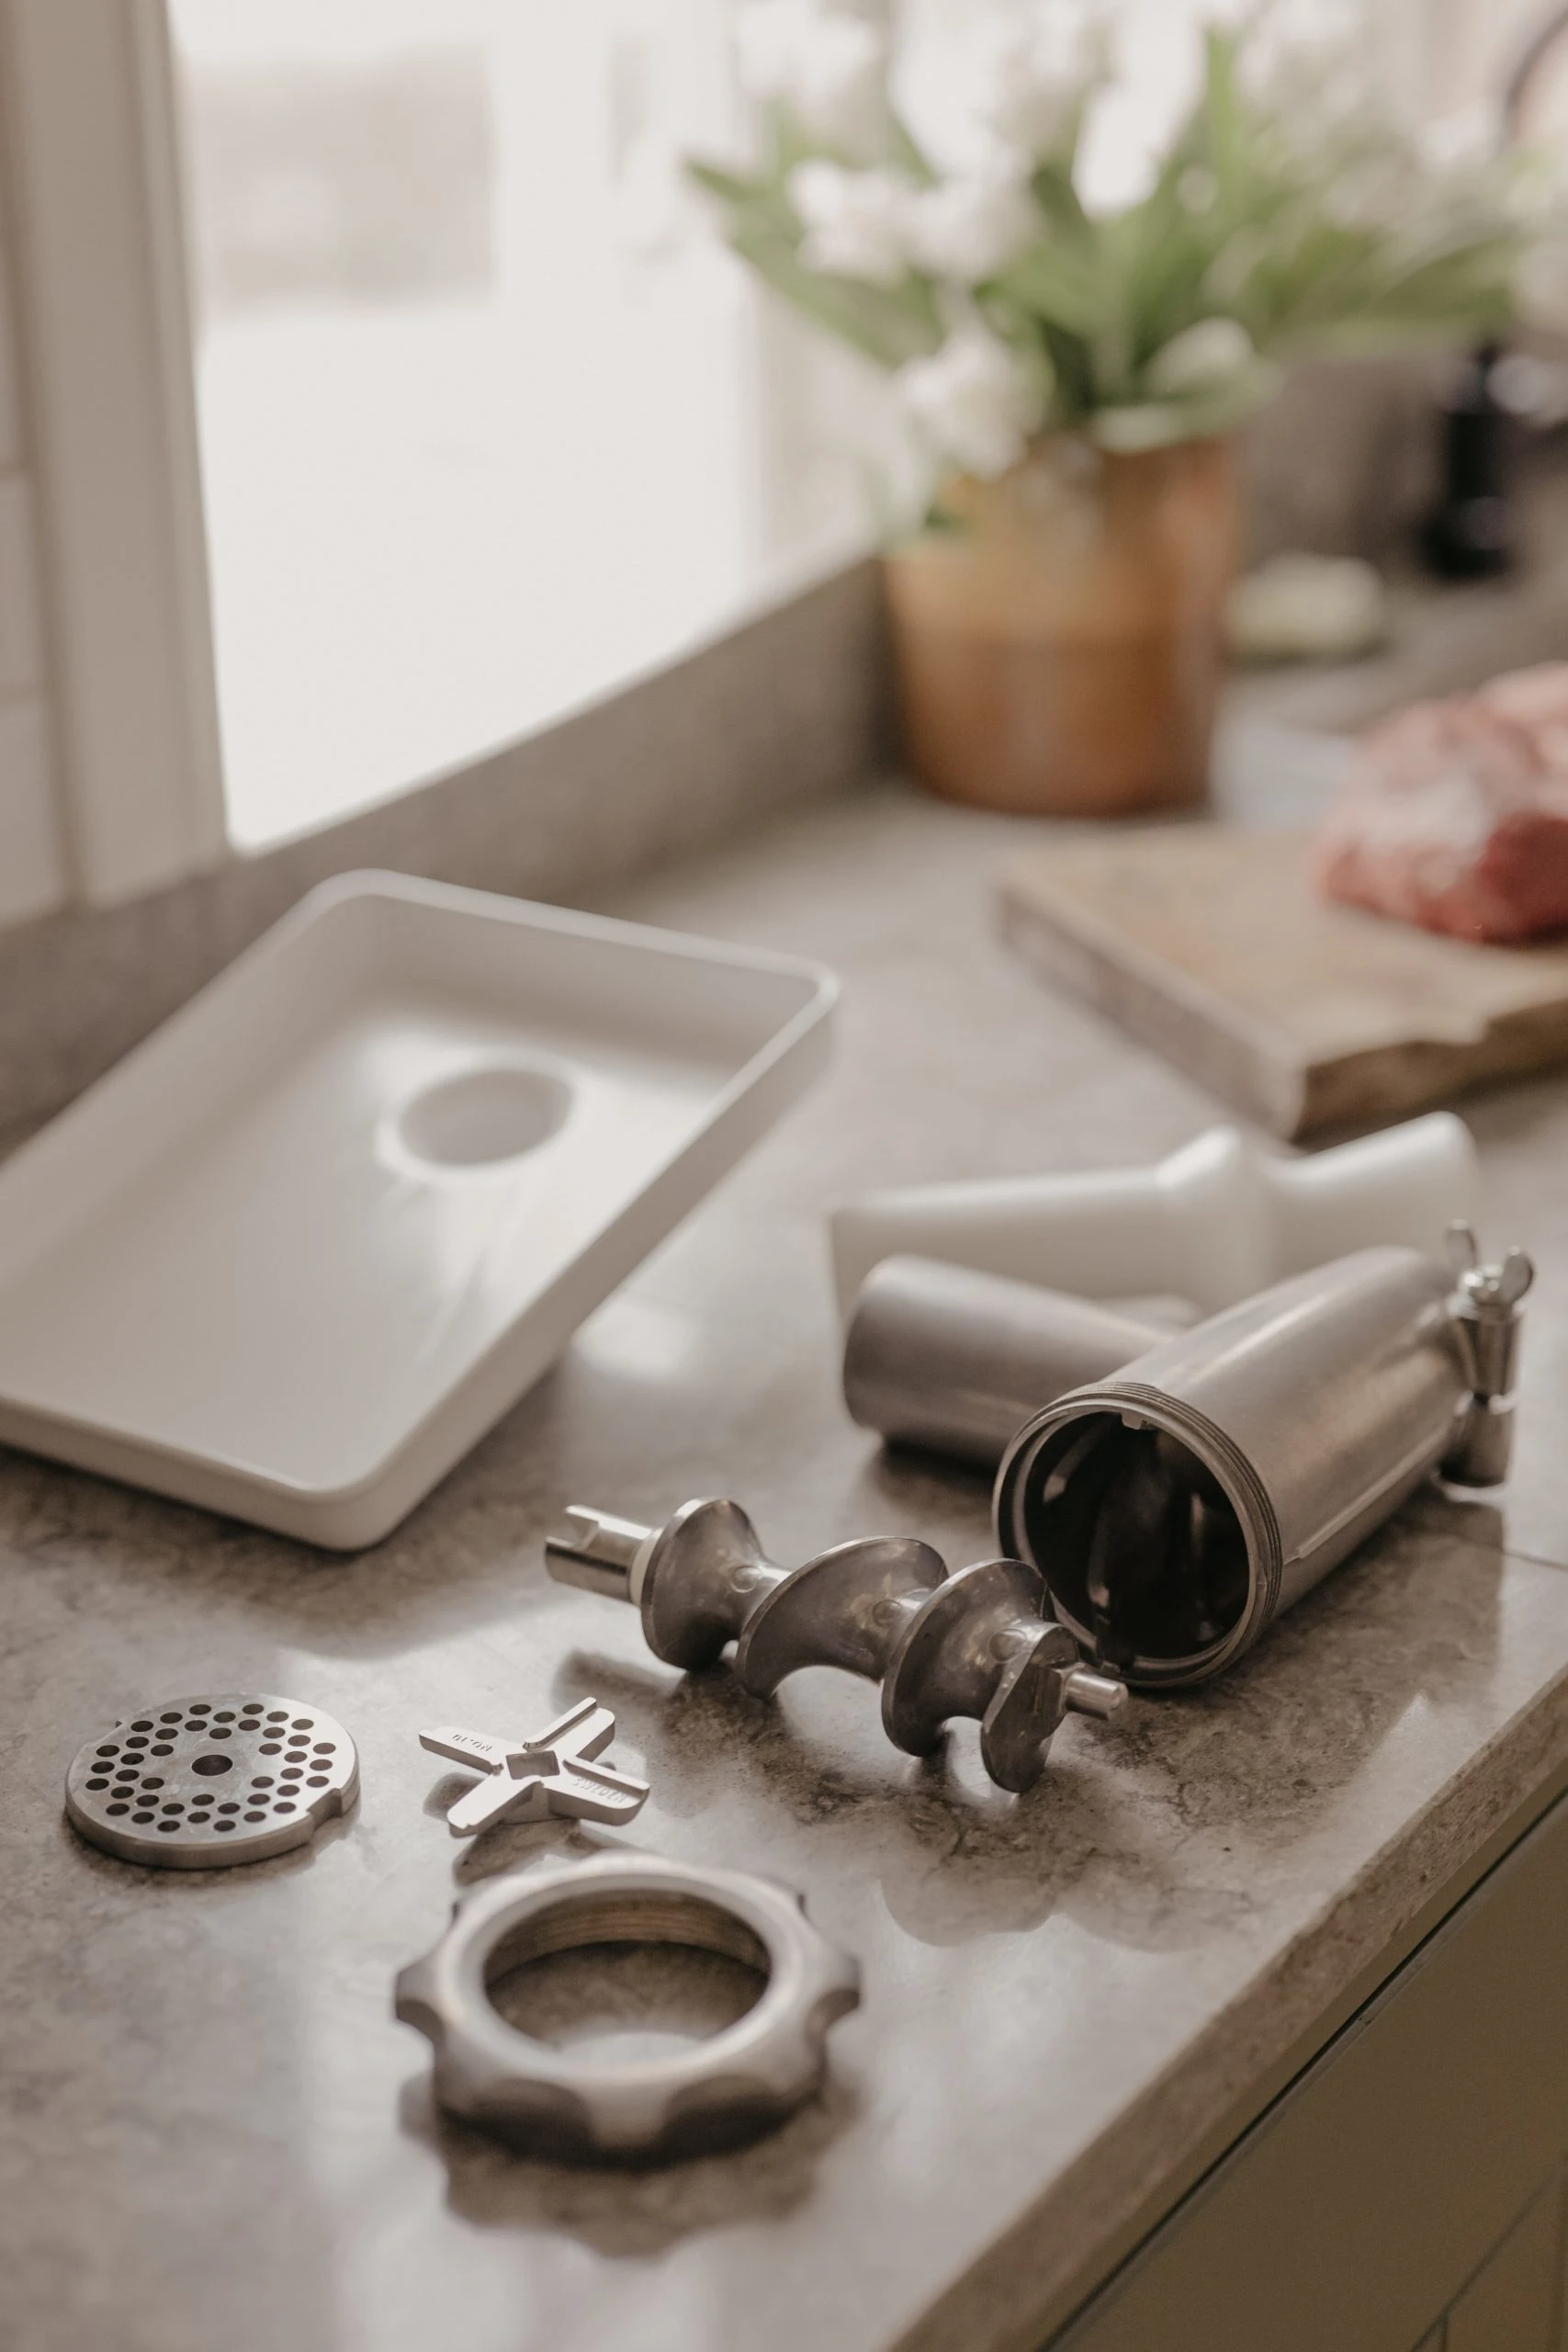 Ankarsrum Mixer and Universal Kitchen Appliance – Breadtopia